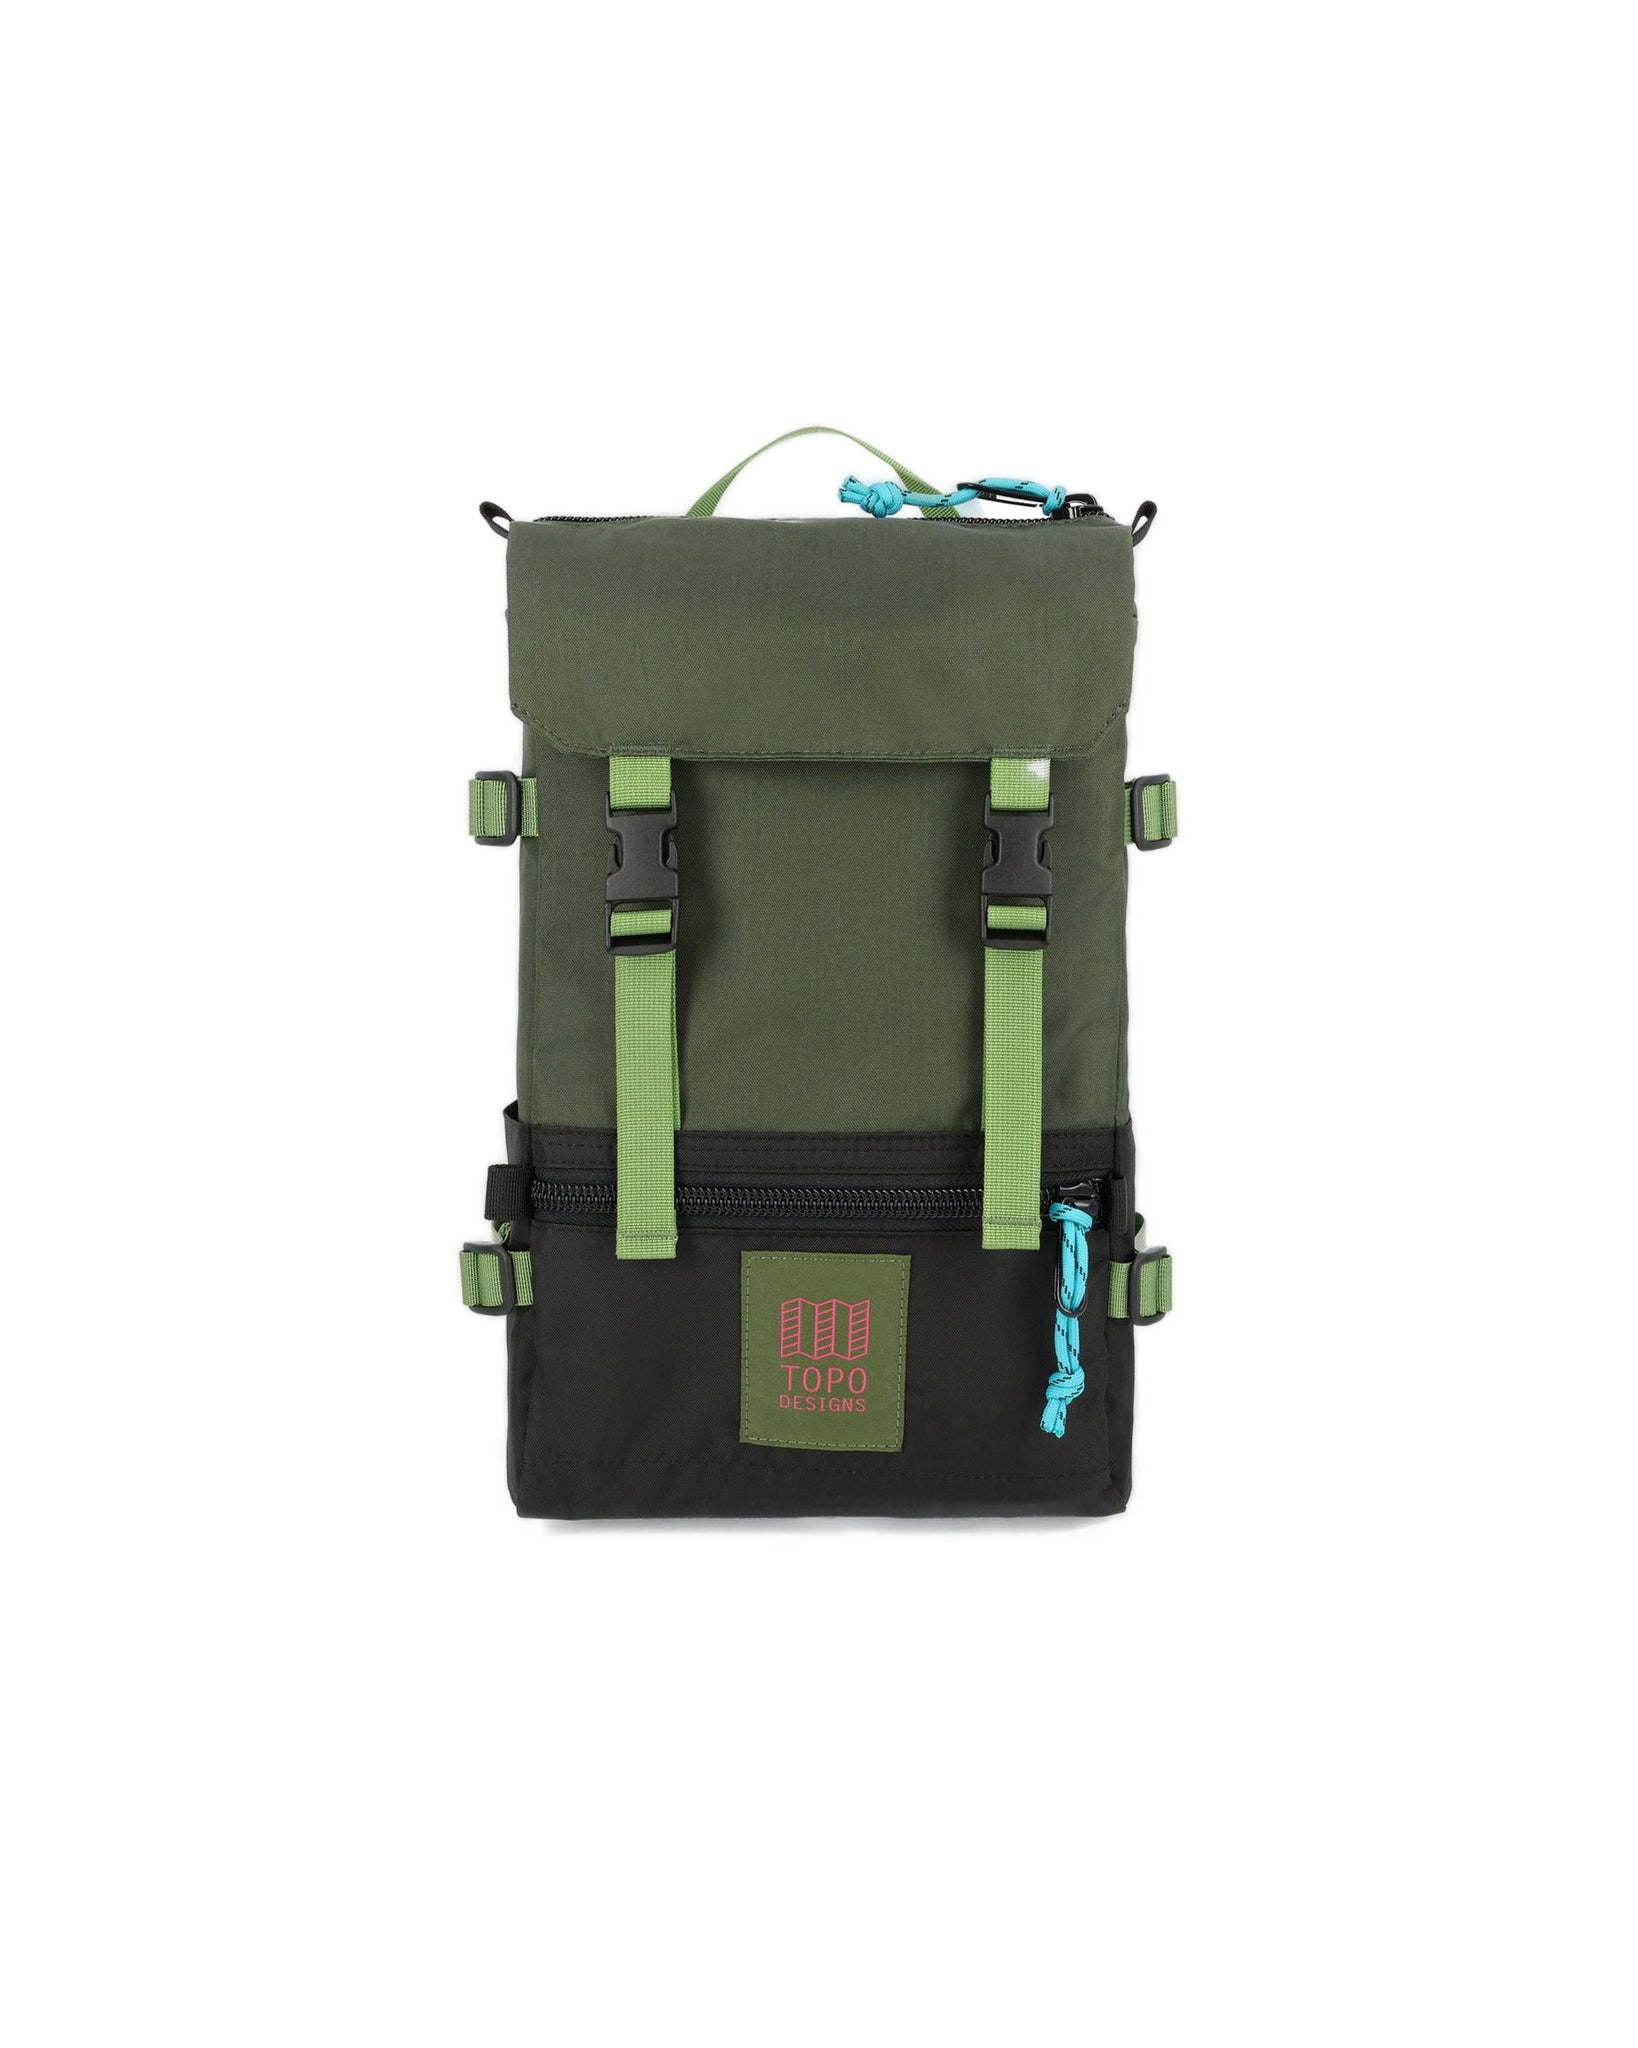 Rover Pack Mini Backpack - Olive/Black